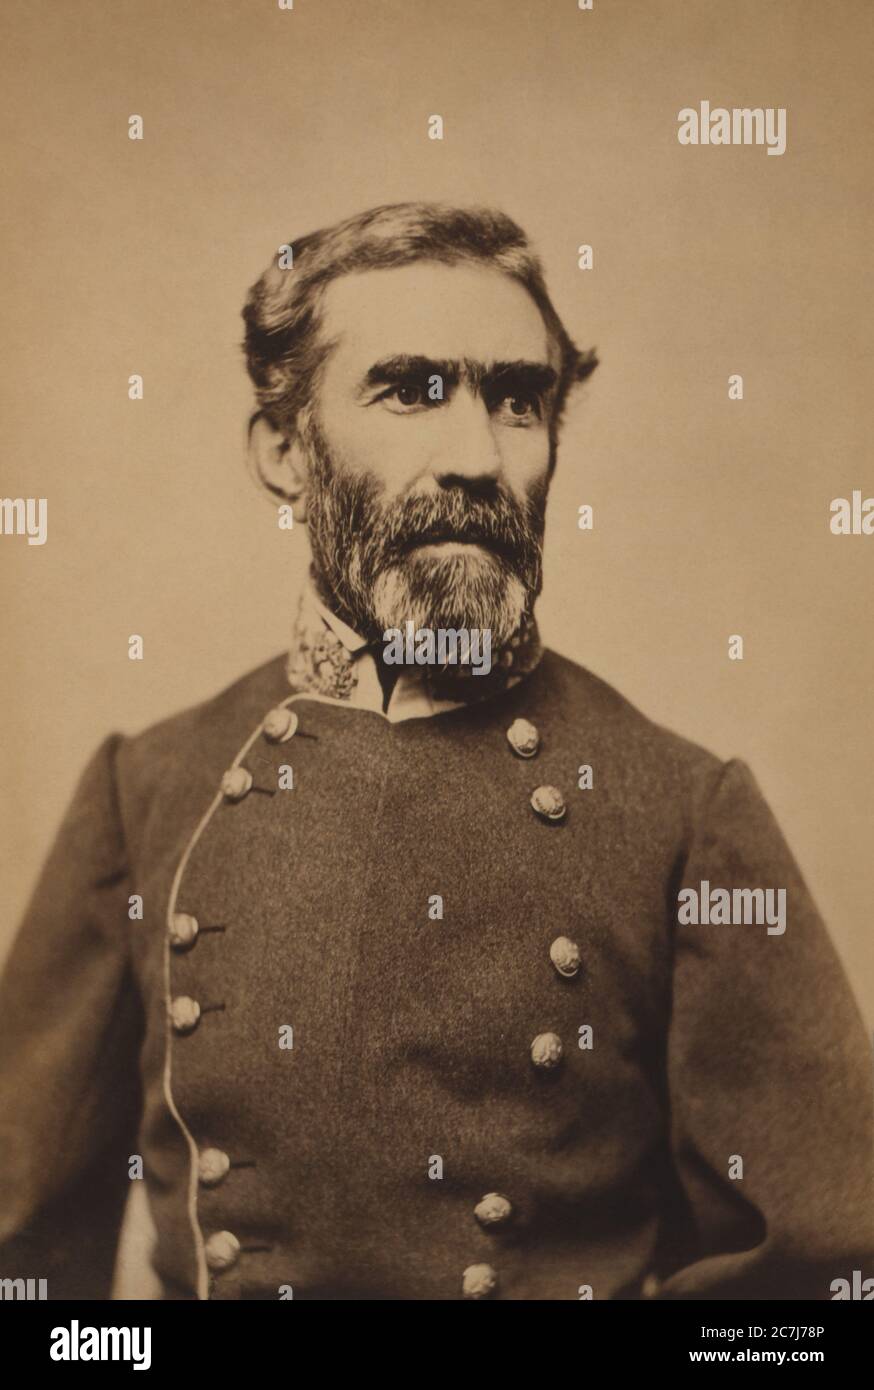 Braxton Bragg, General, Confederate States Army, Half-Length Portrait, Civil War Photograph Collection, 1860's Stock Photo